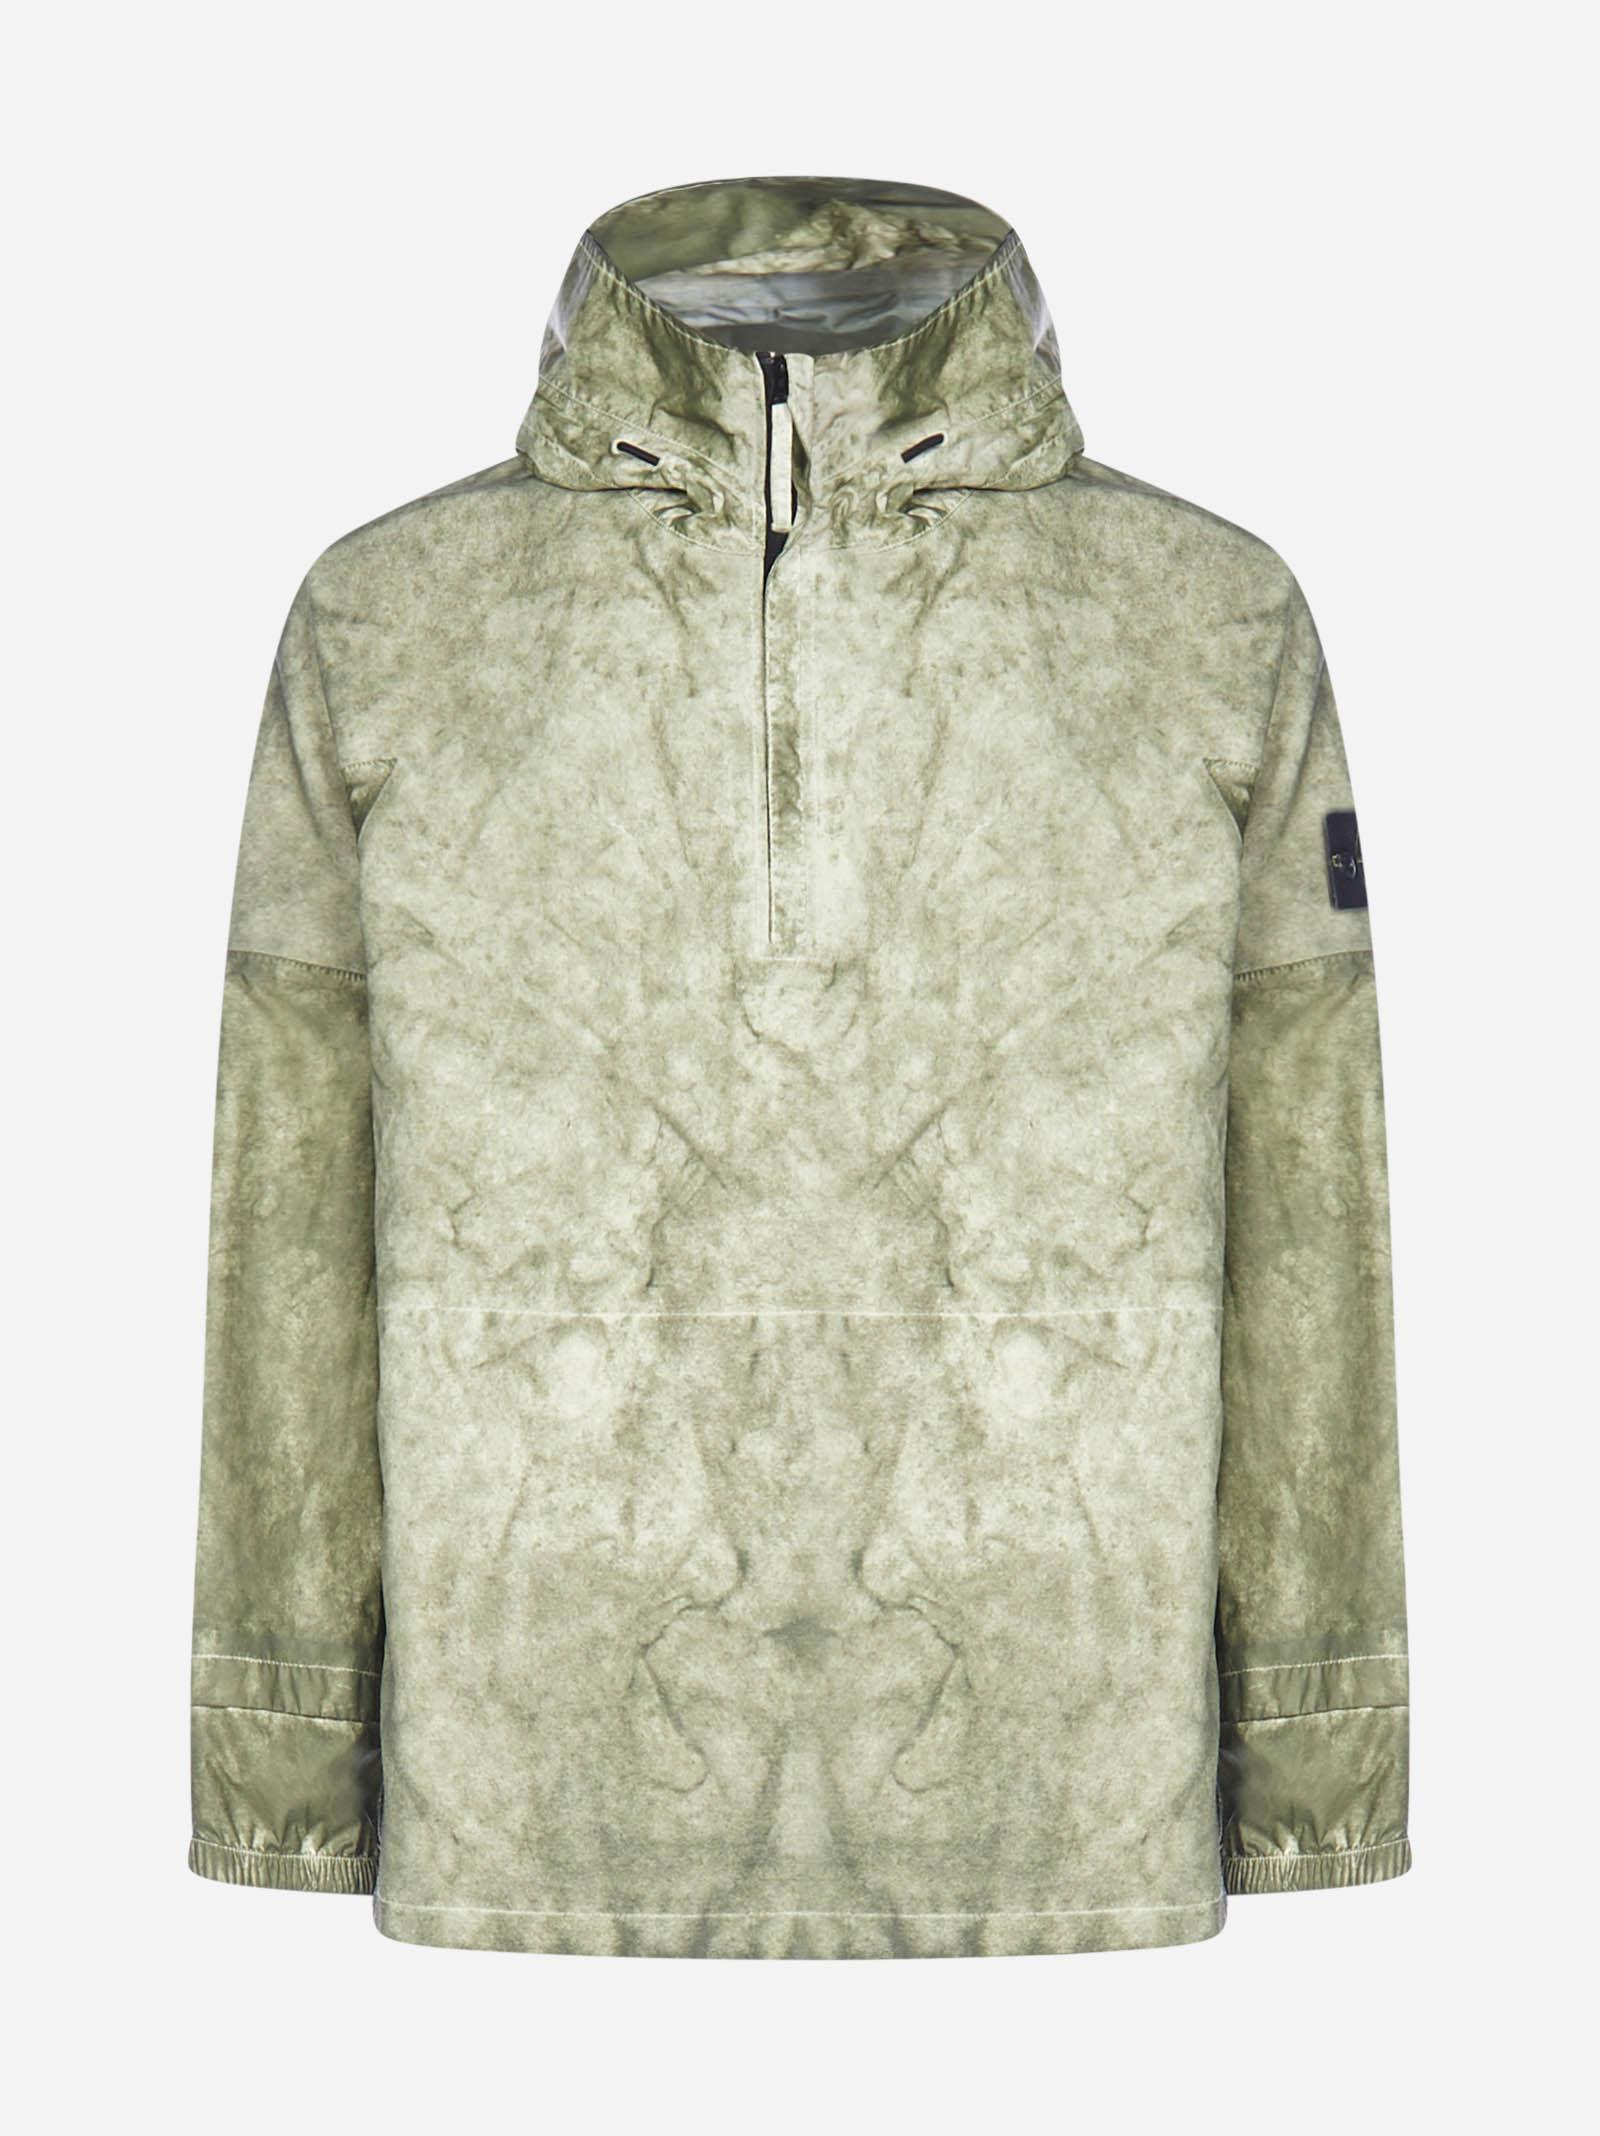 Stone Island Synthetic Dust Membrana 3l Oxford Jacket in Khaki (Green) for  Men - Lyst